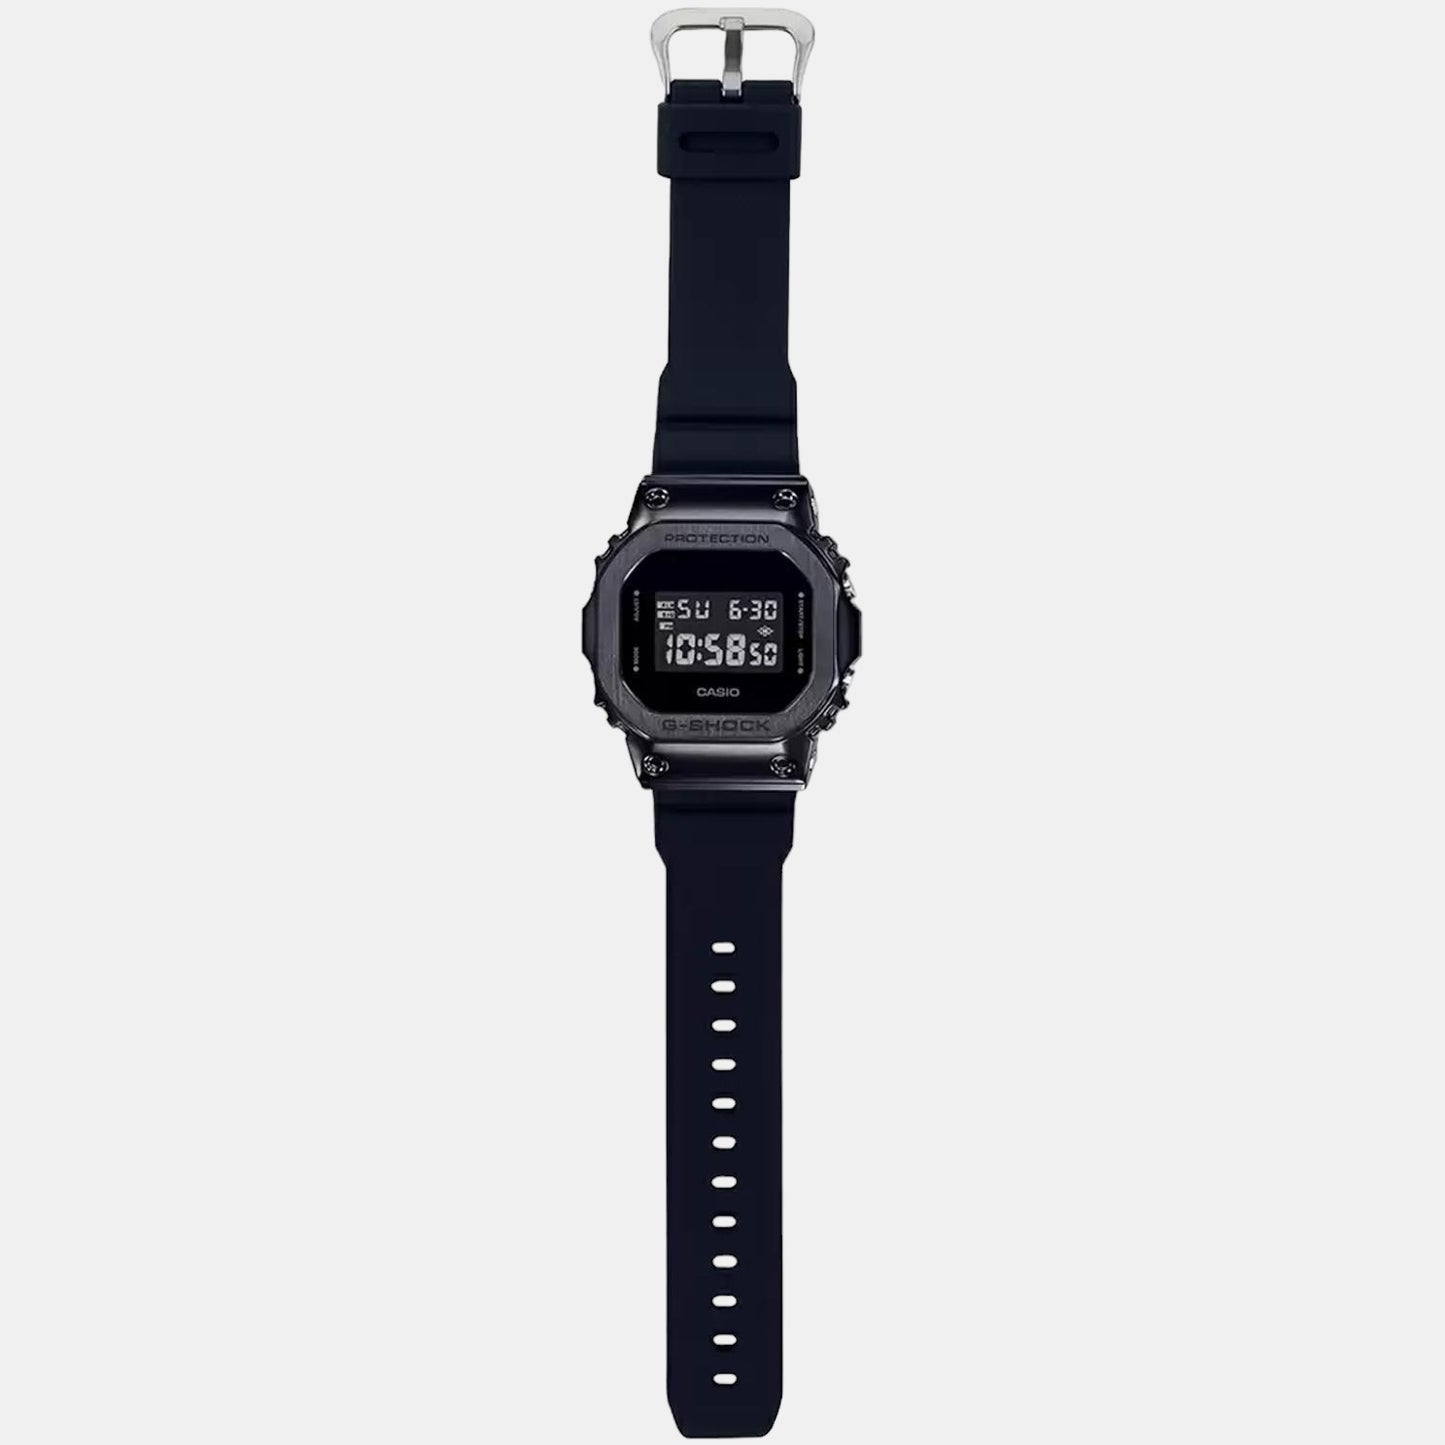 casio-resin-black-digital-mens-watch-g993